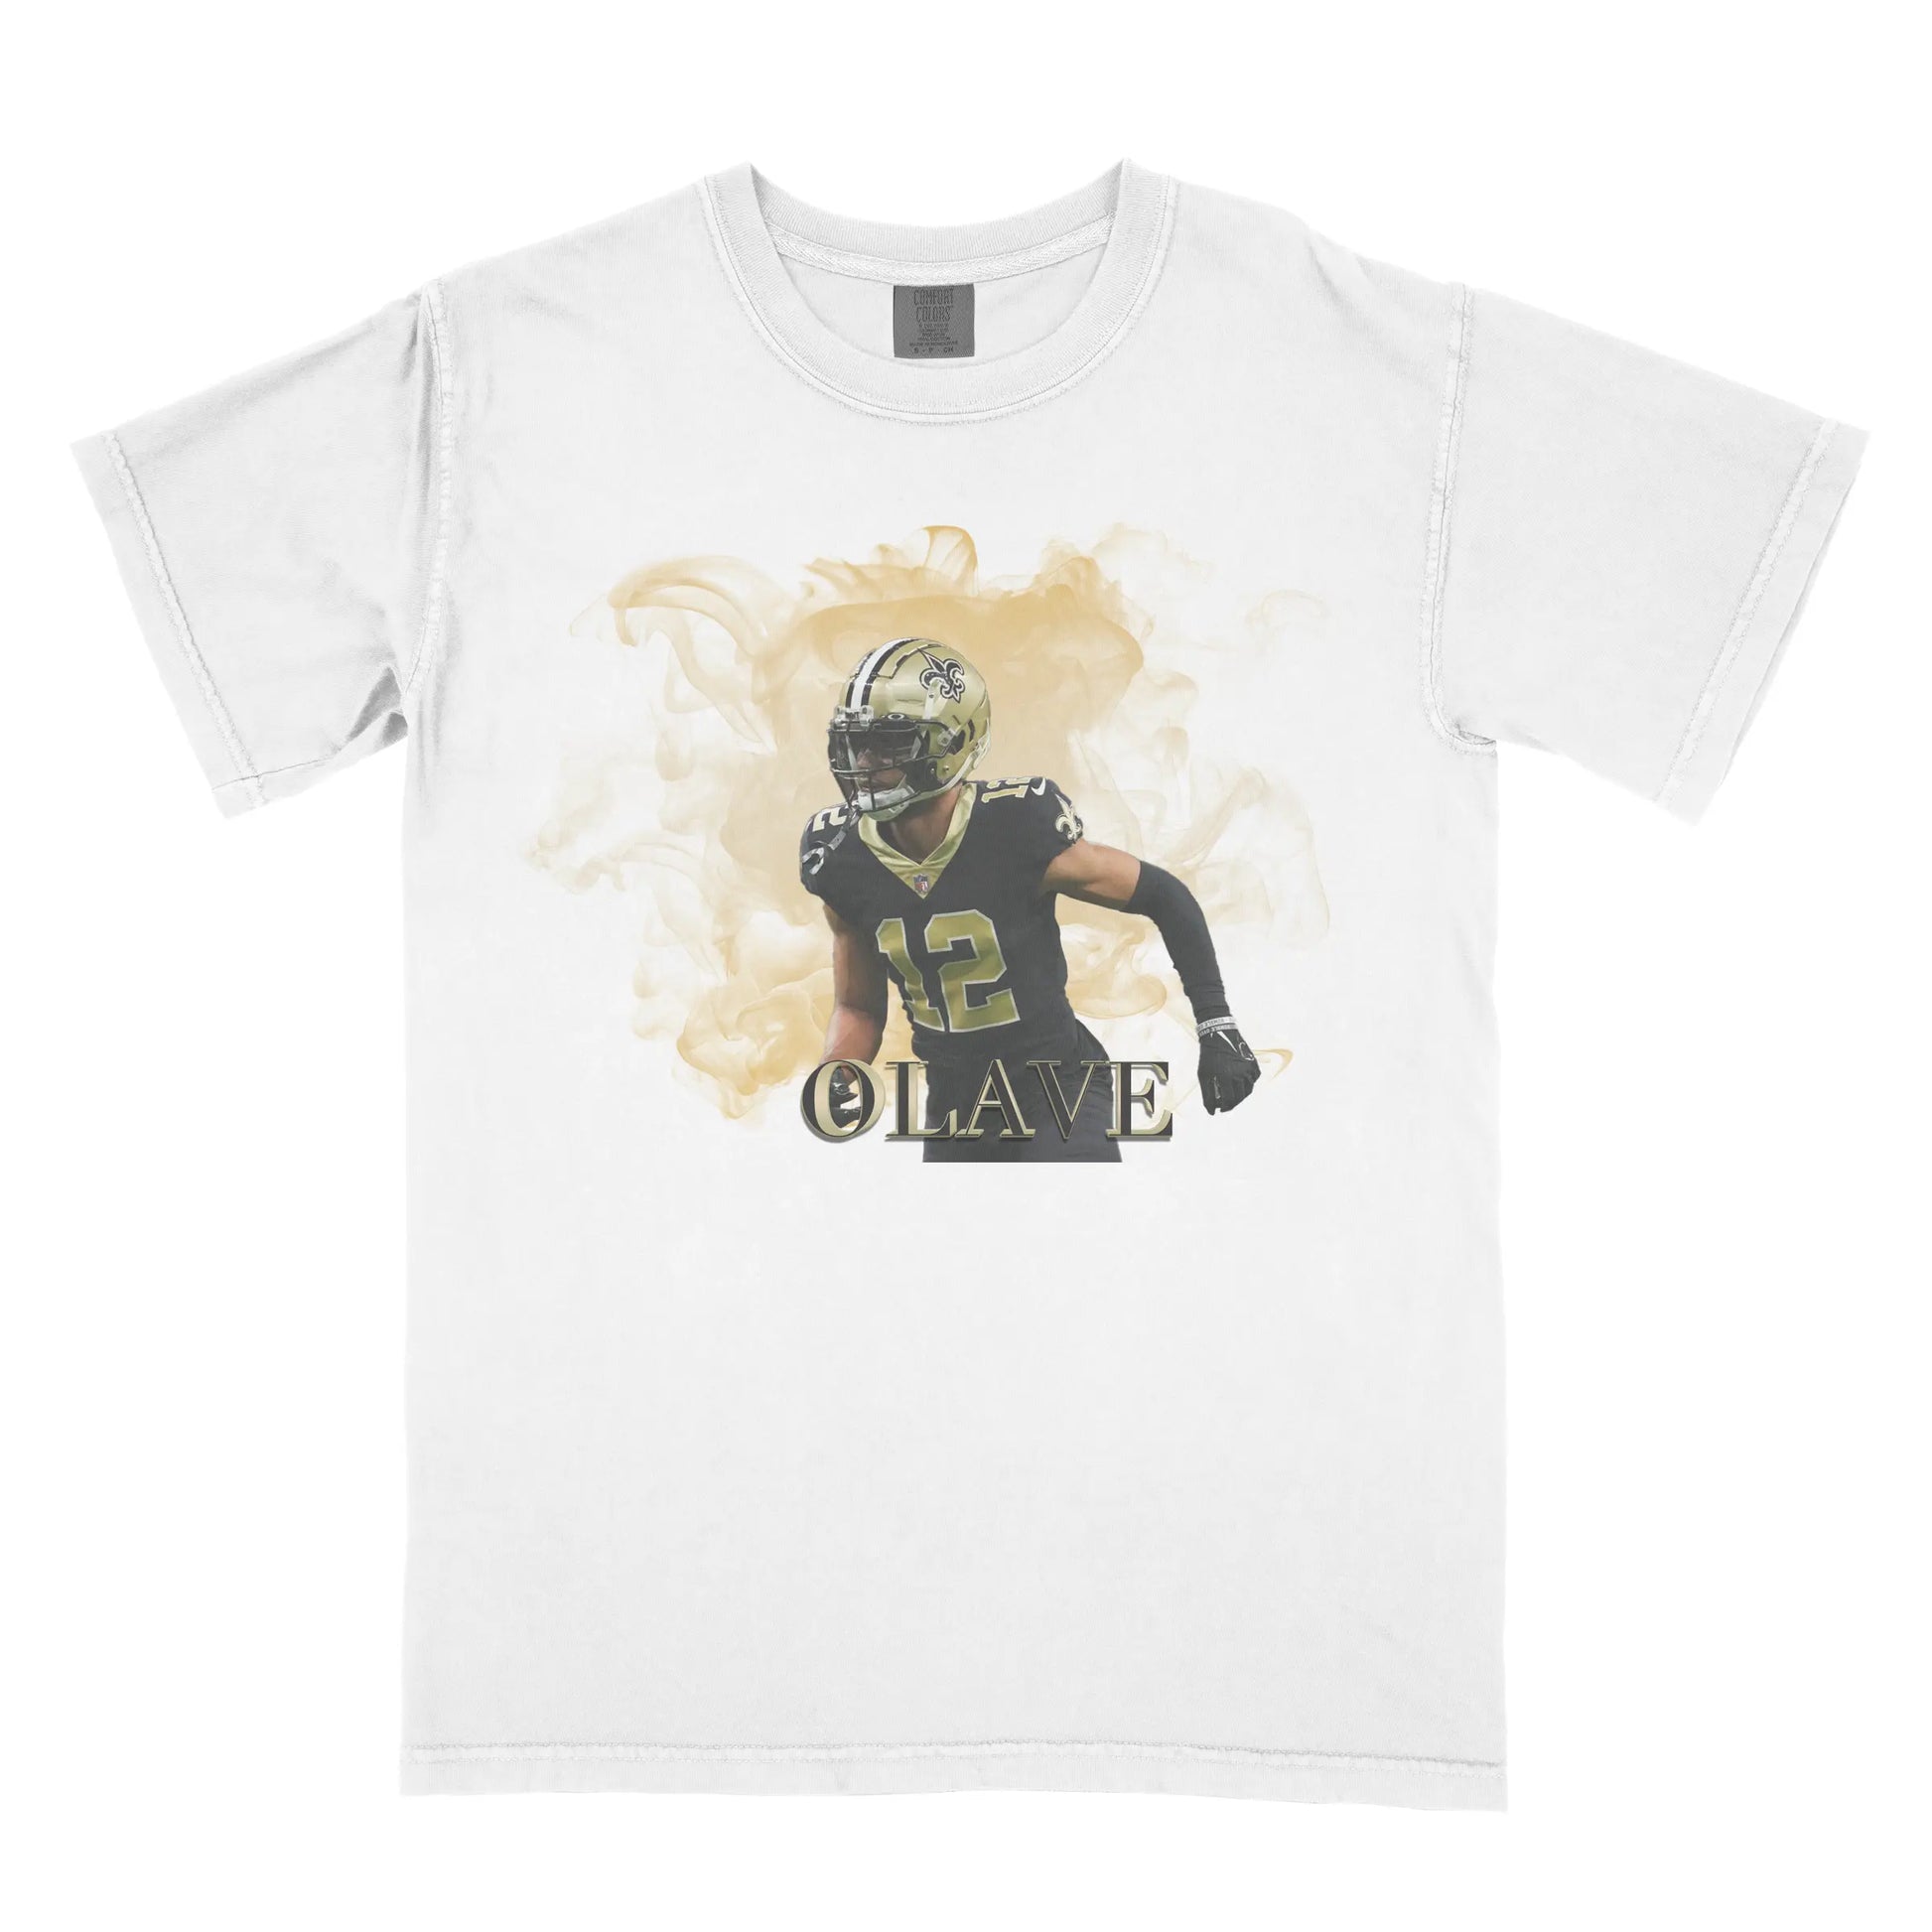 Vintage-Inspired Bootleg New Orleans Saints Cotton T-Shirt - Boo Koo Art